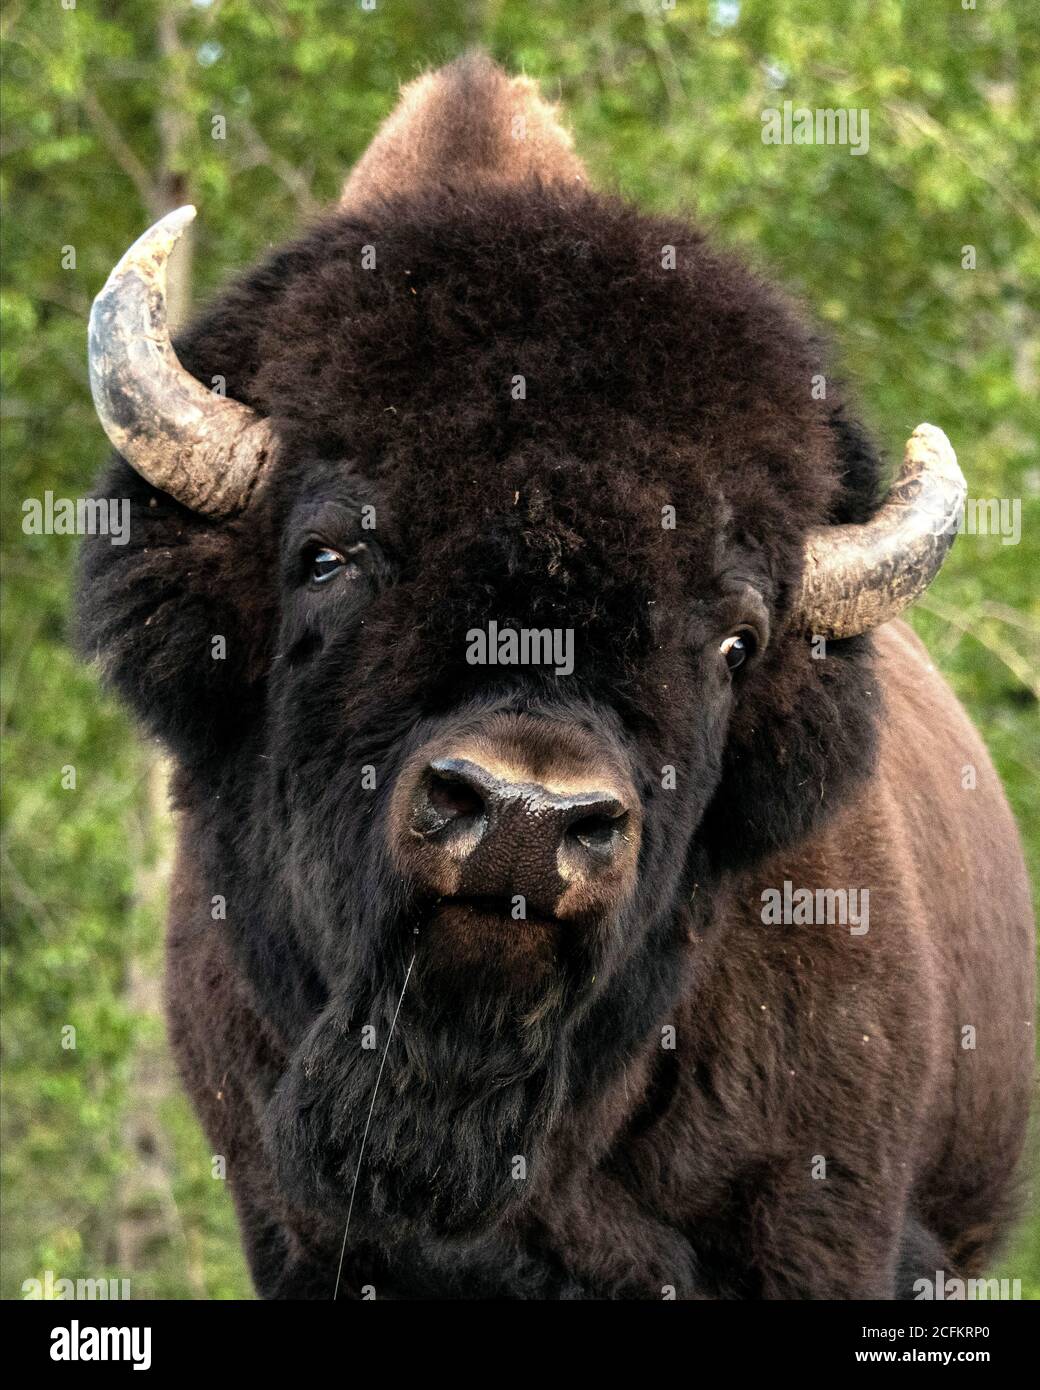 Bison in Kanada entlang des Alaska Highway gesehen. Stockfoto